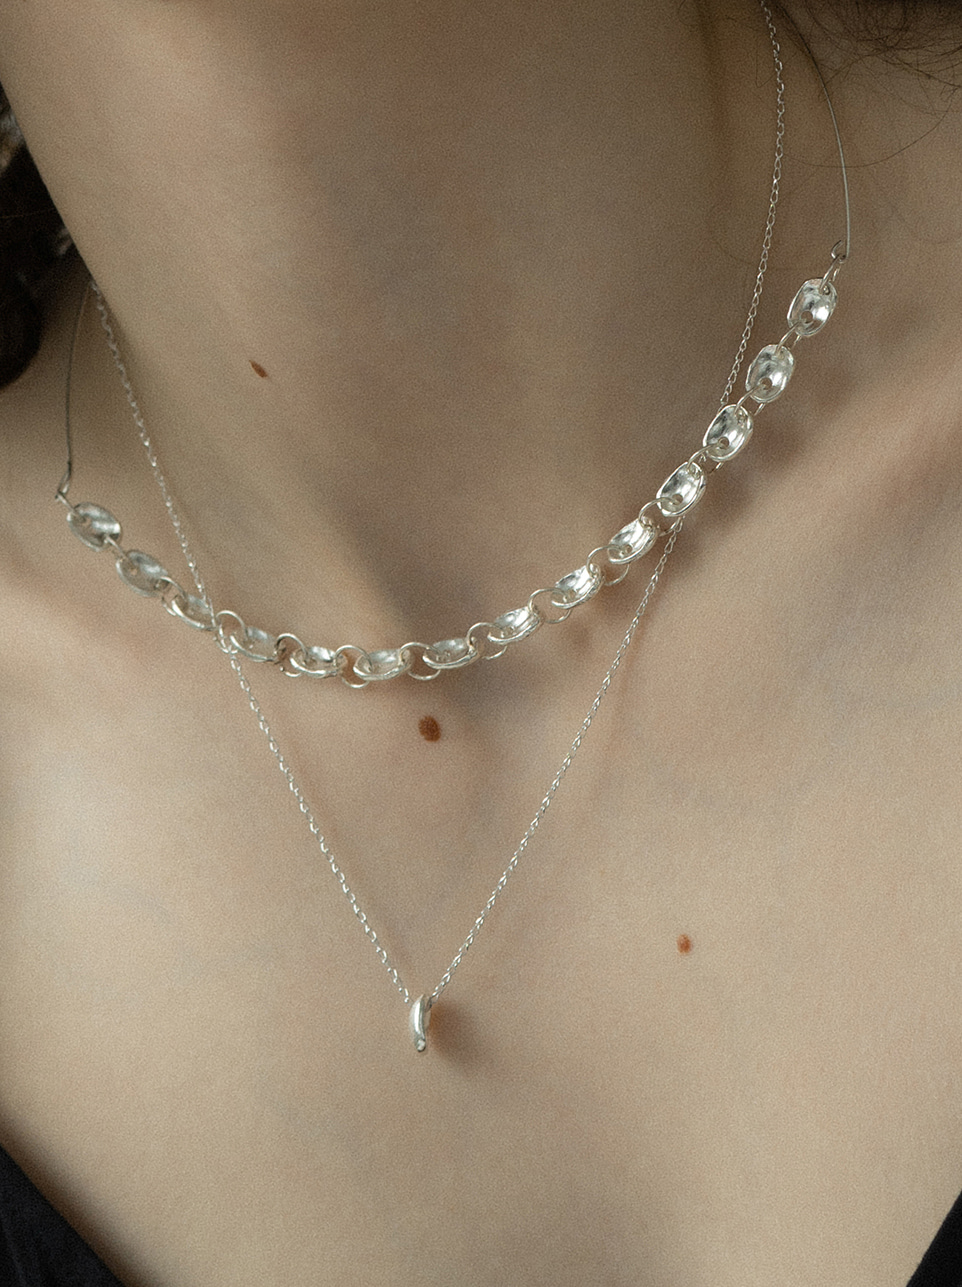 Thin mound necklace